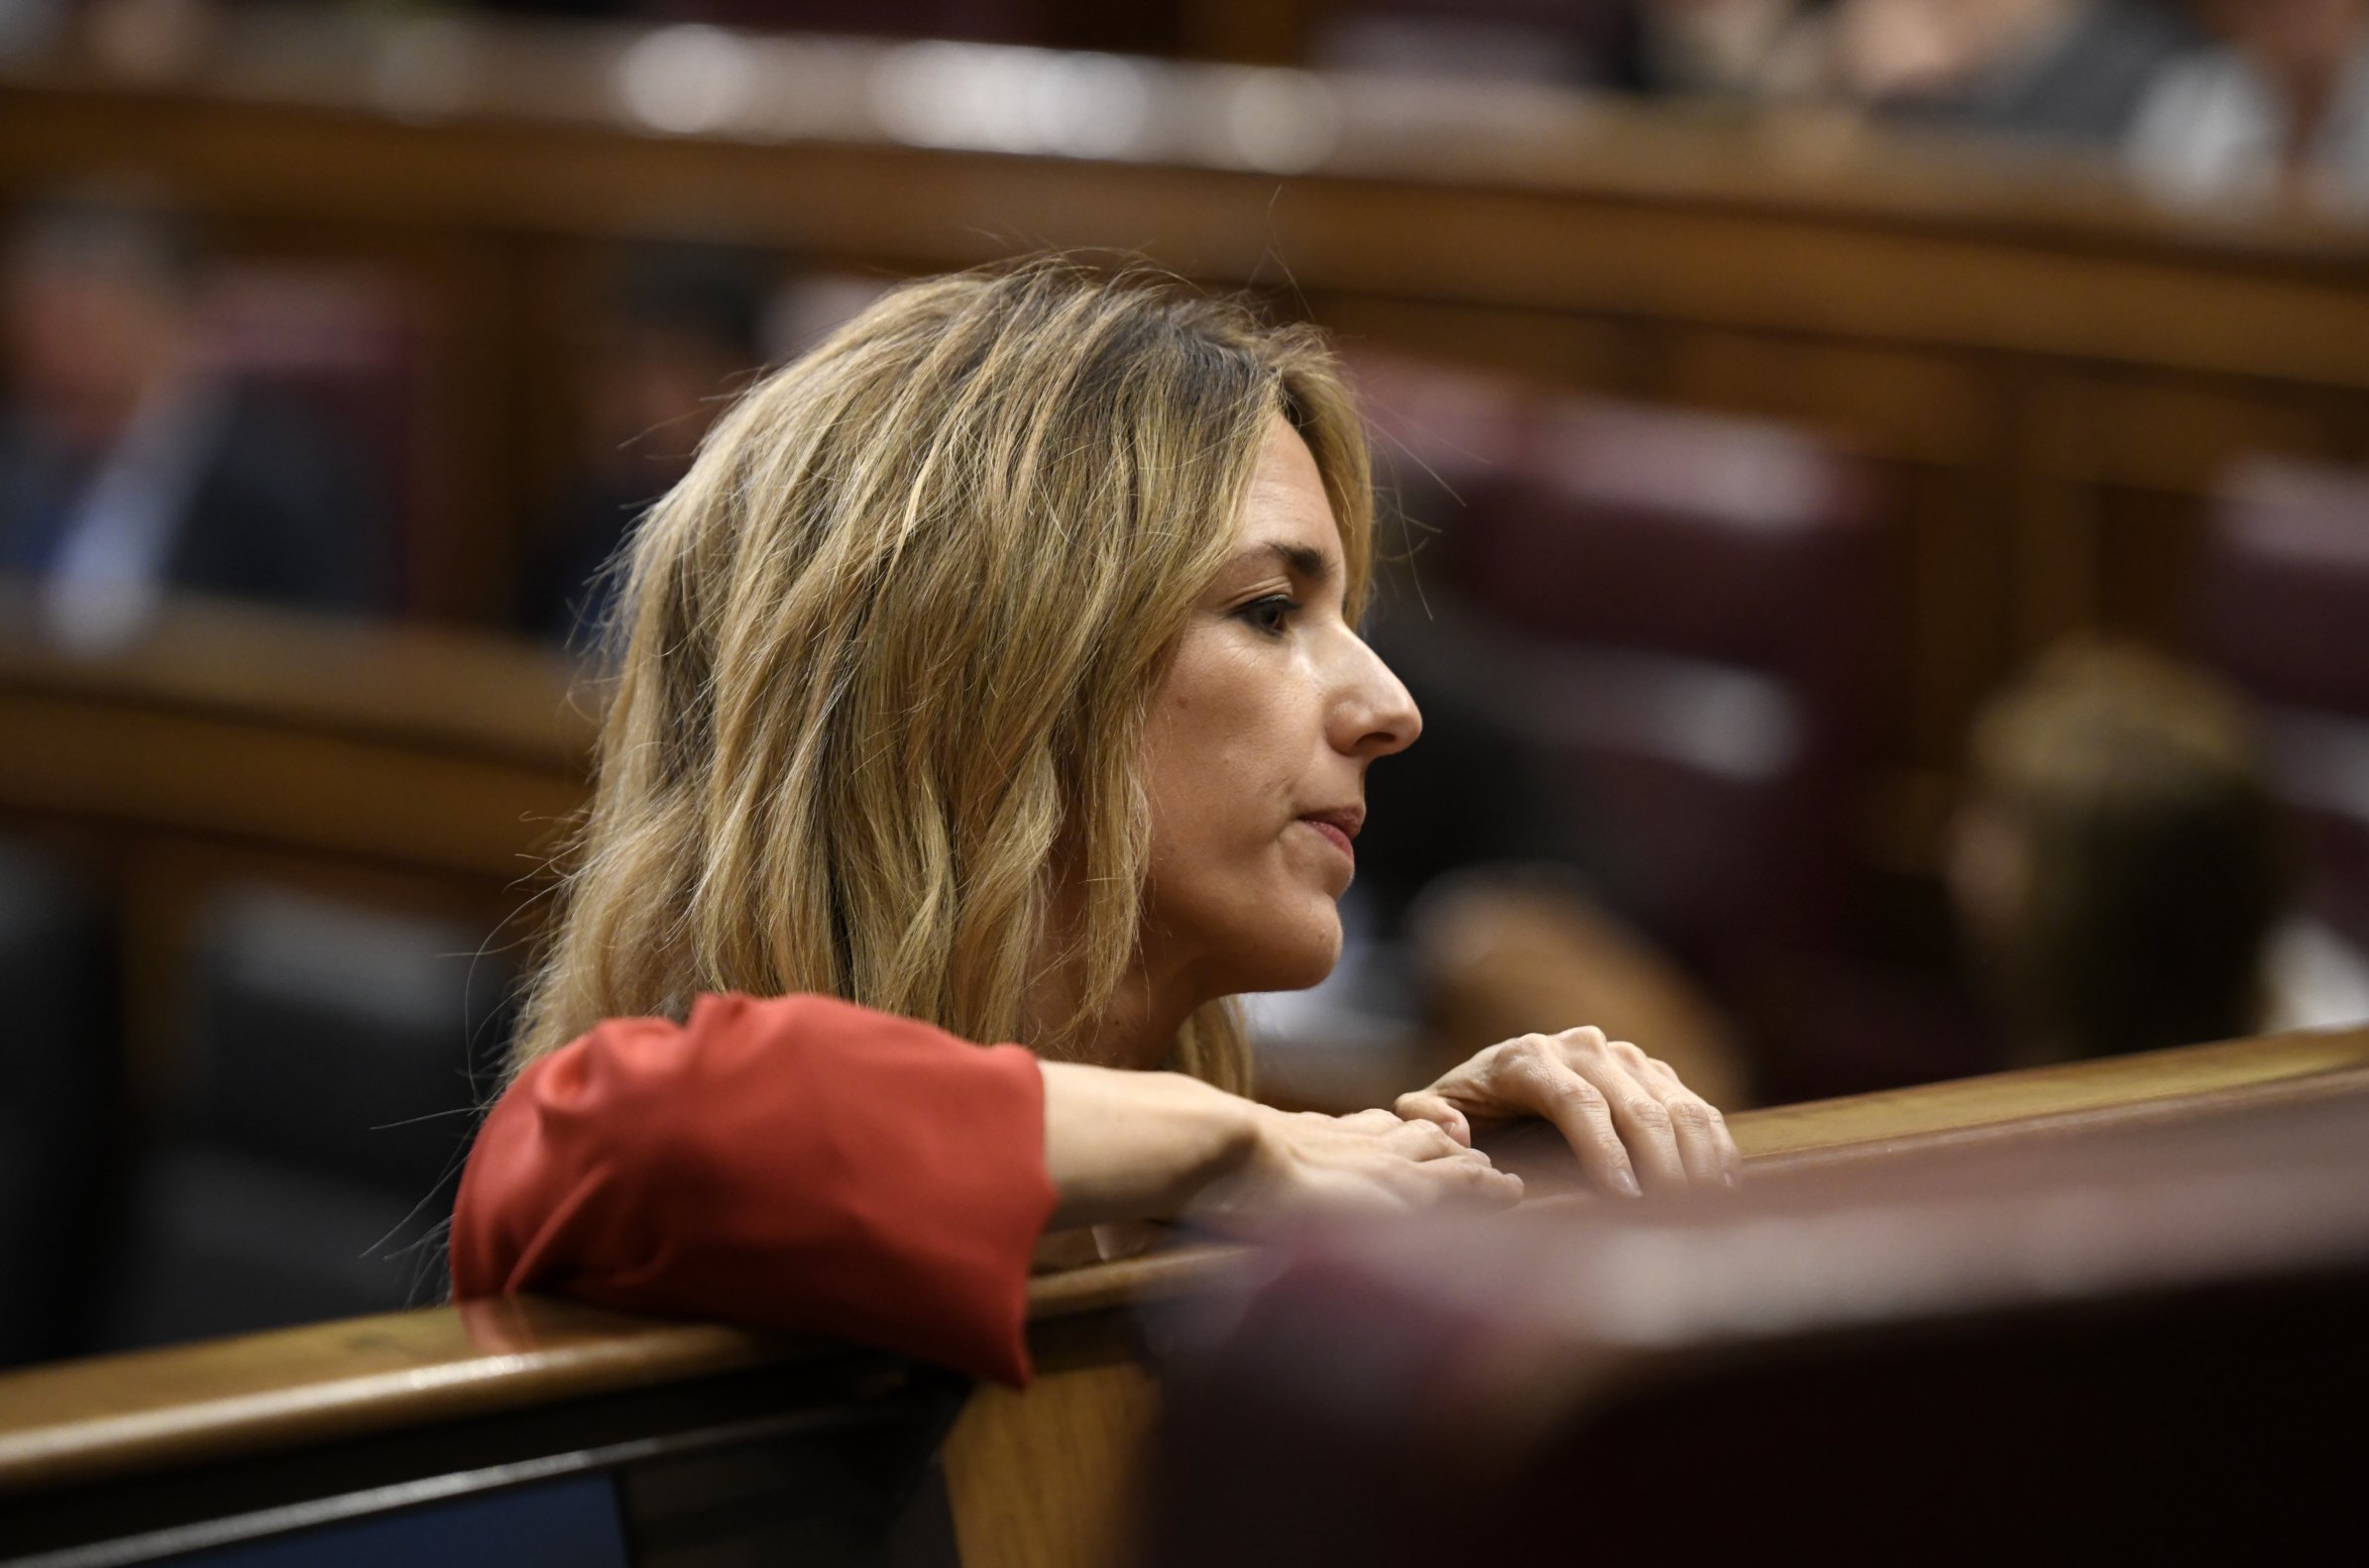 Un presentador català de La Sexta humilia Cayetana: "me estoy forrando"